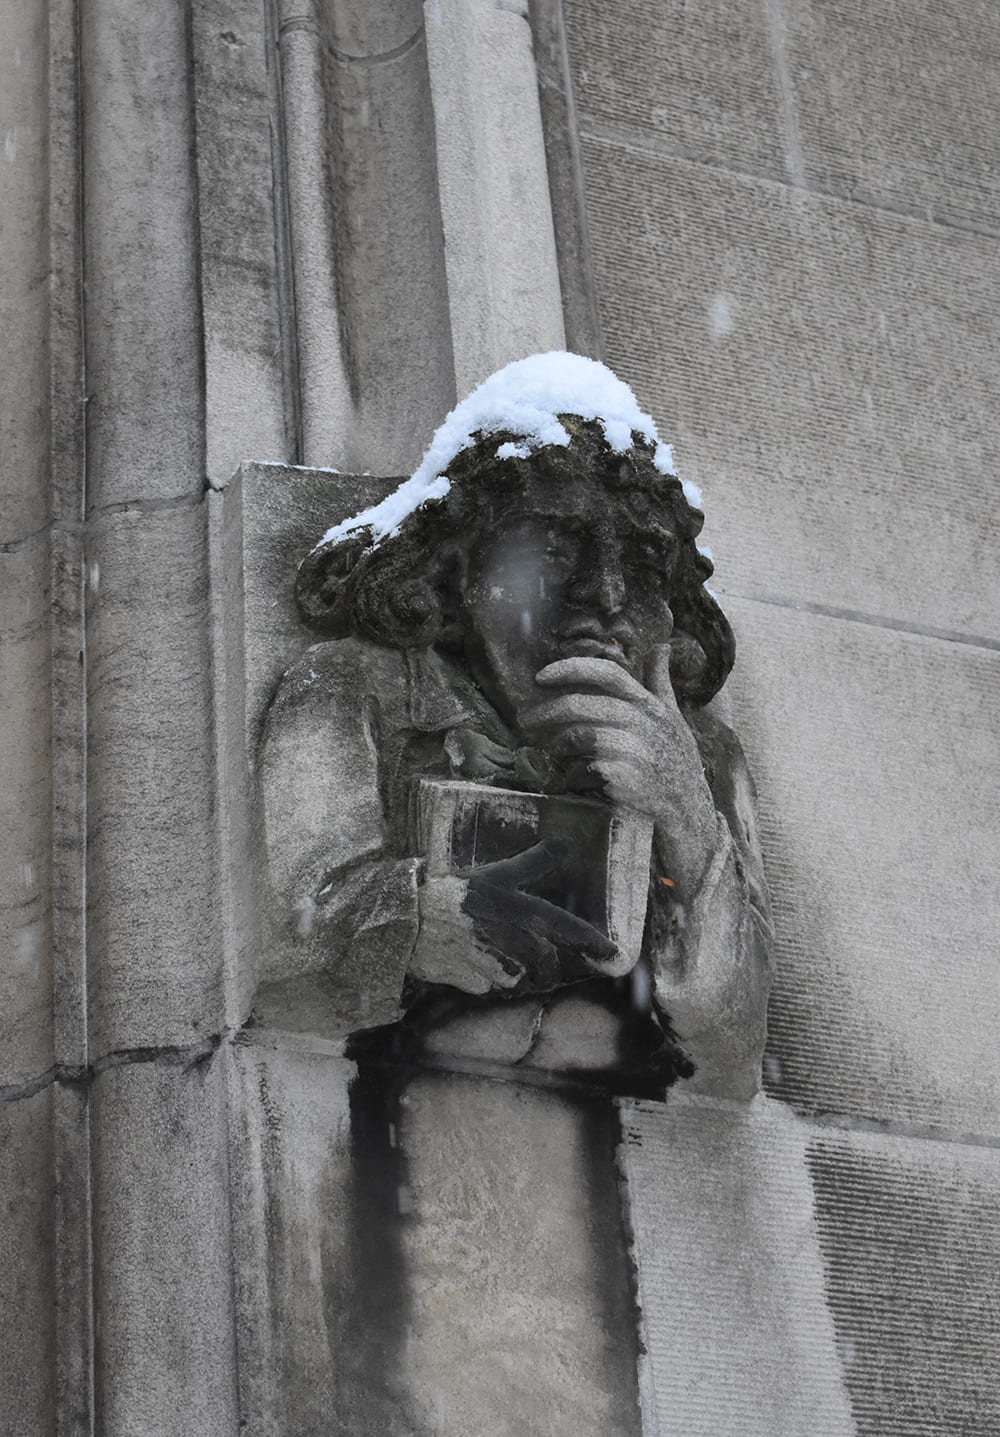 snowy stone figure